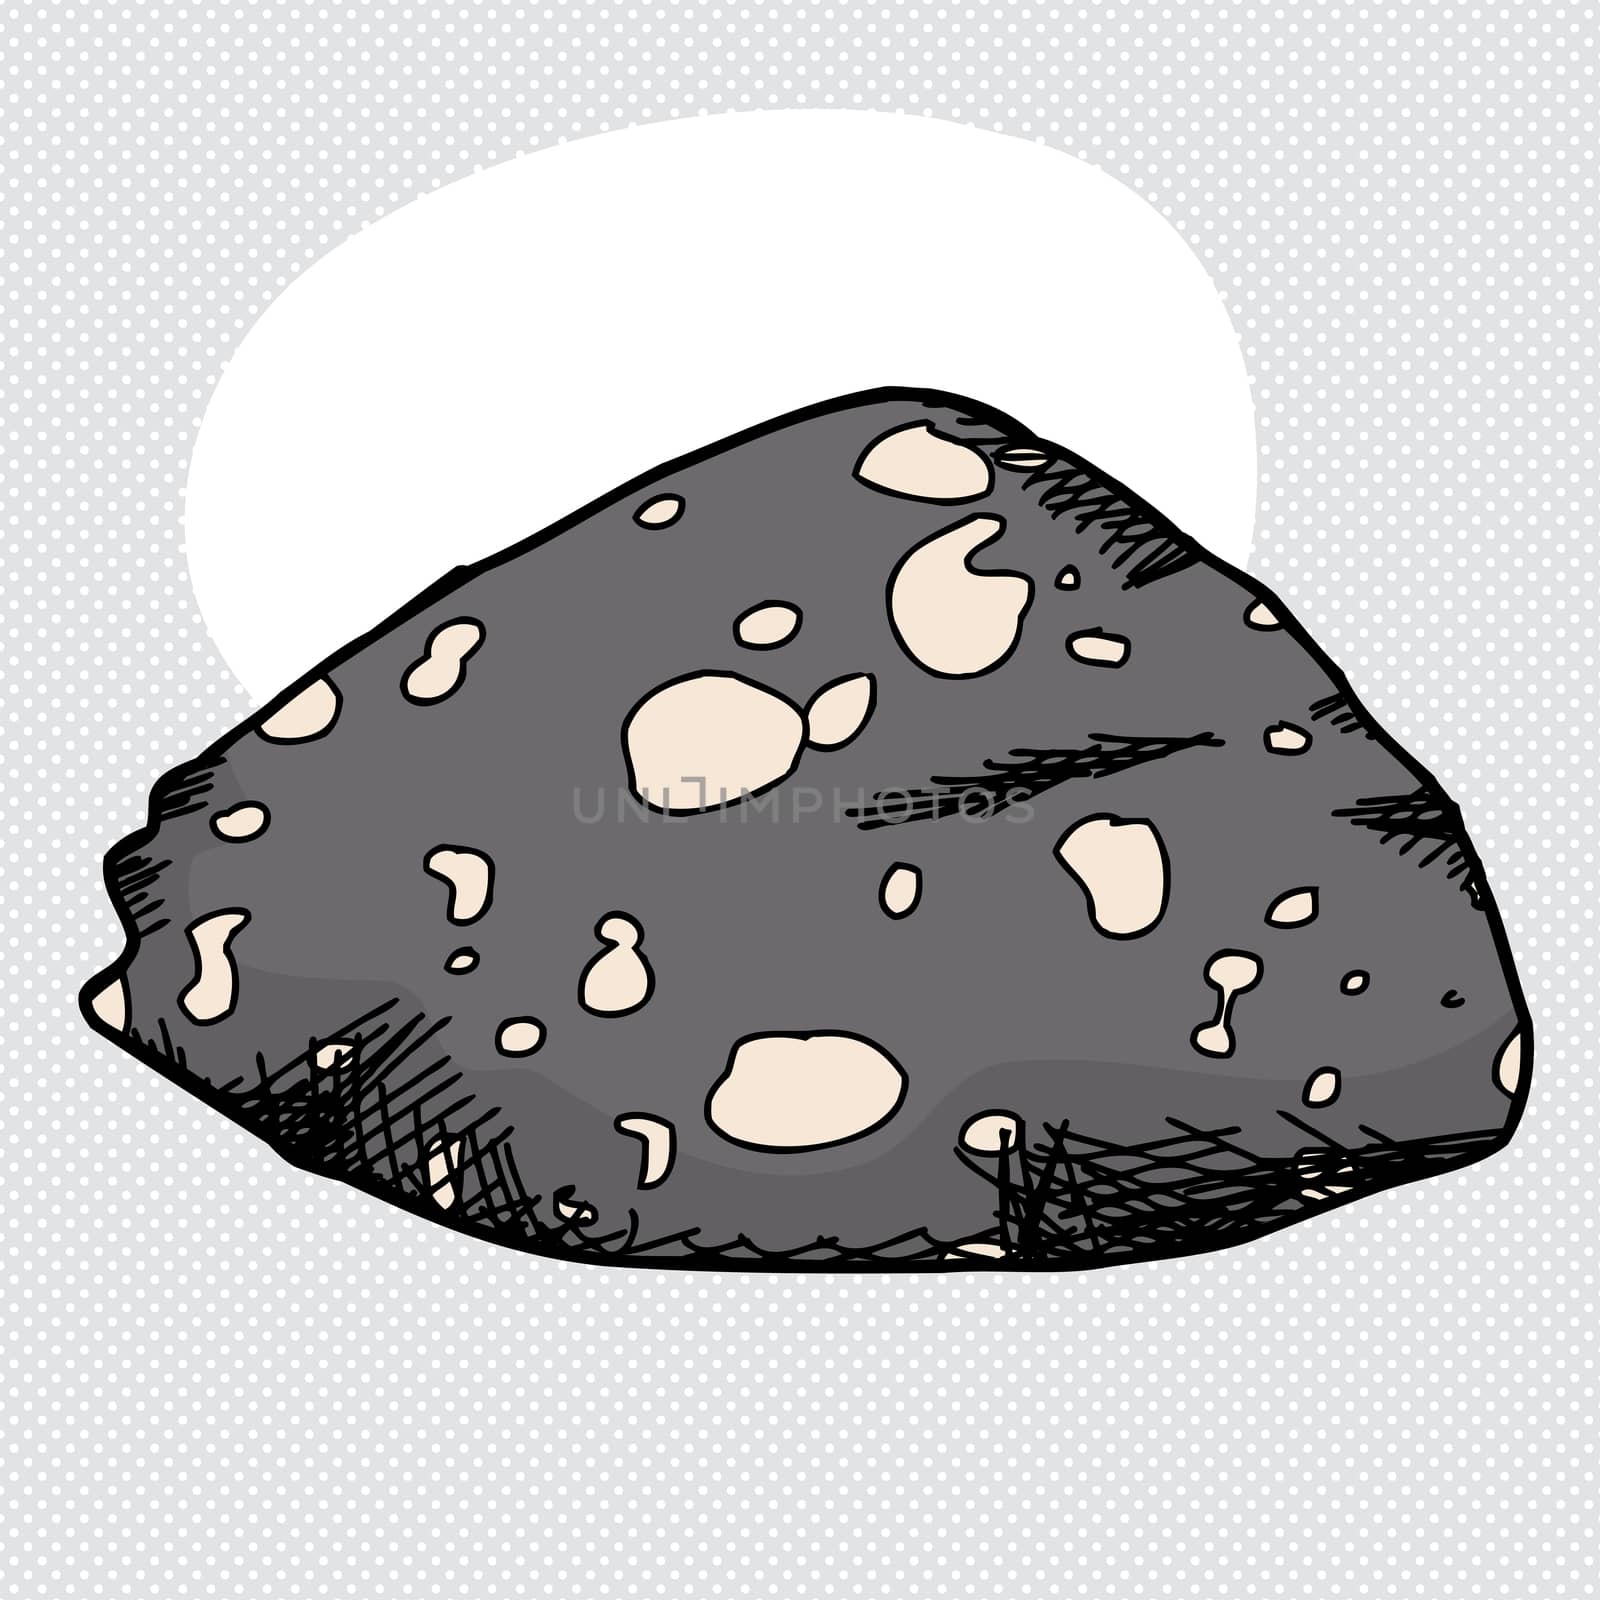 Single Amygdaloidal Basalt Rock by TheBlackRhino